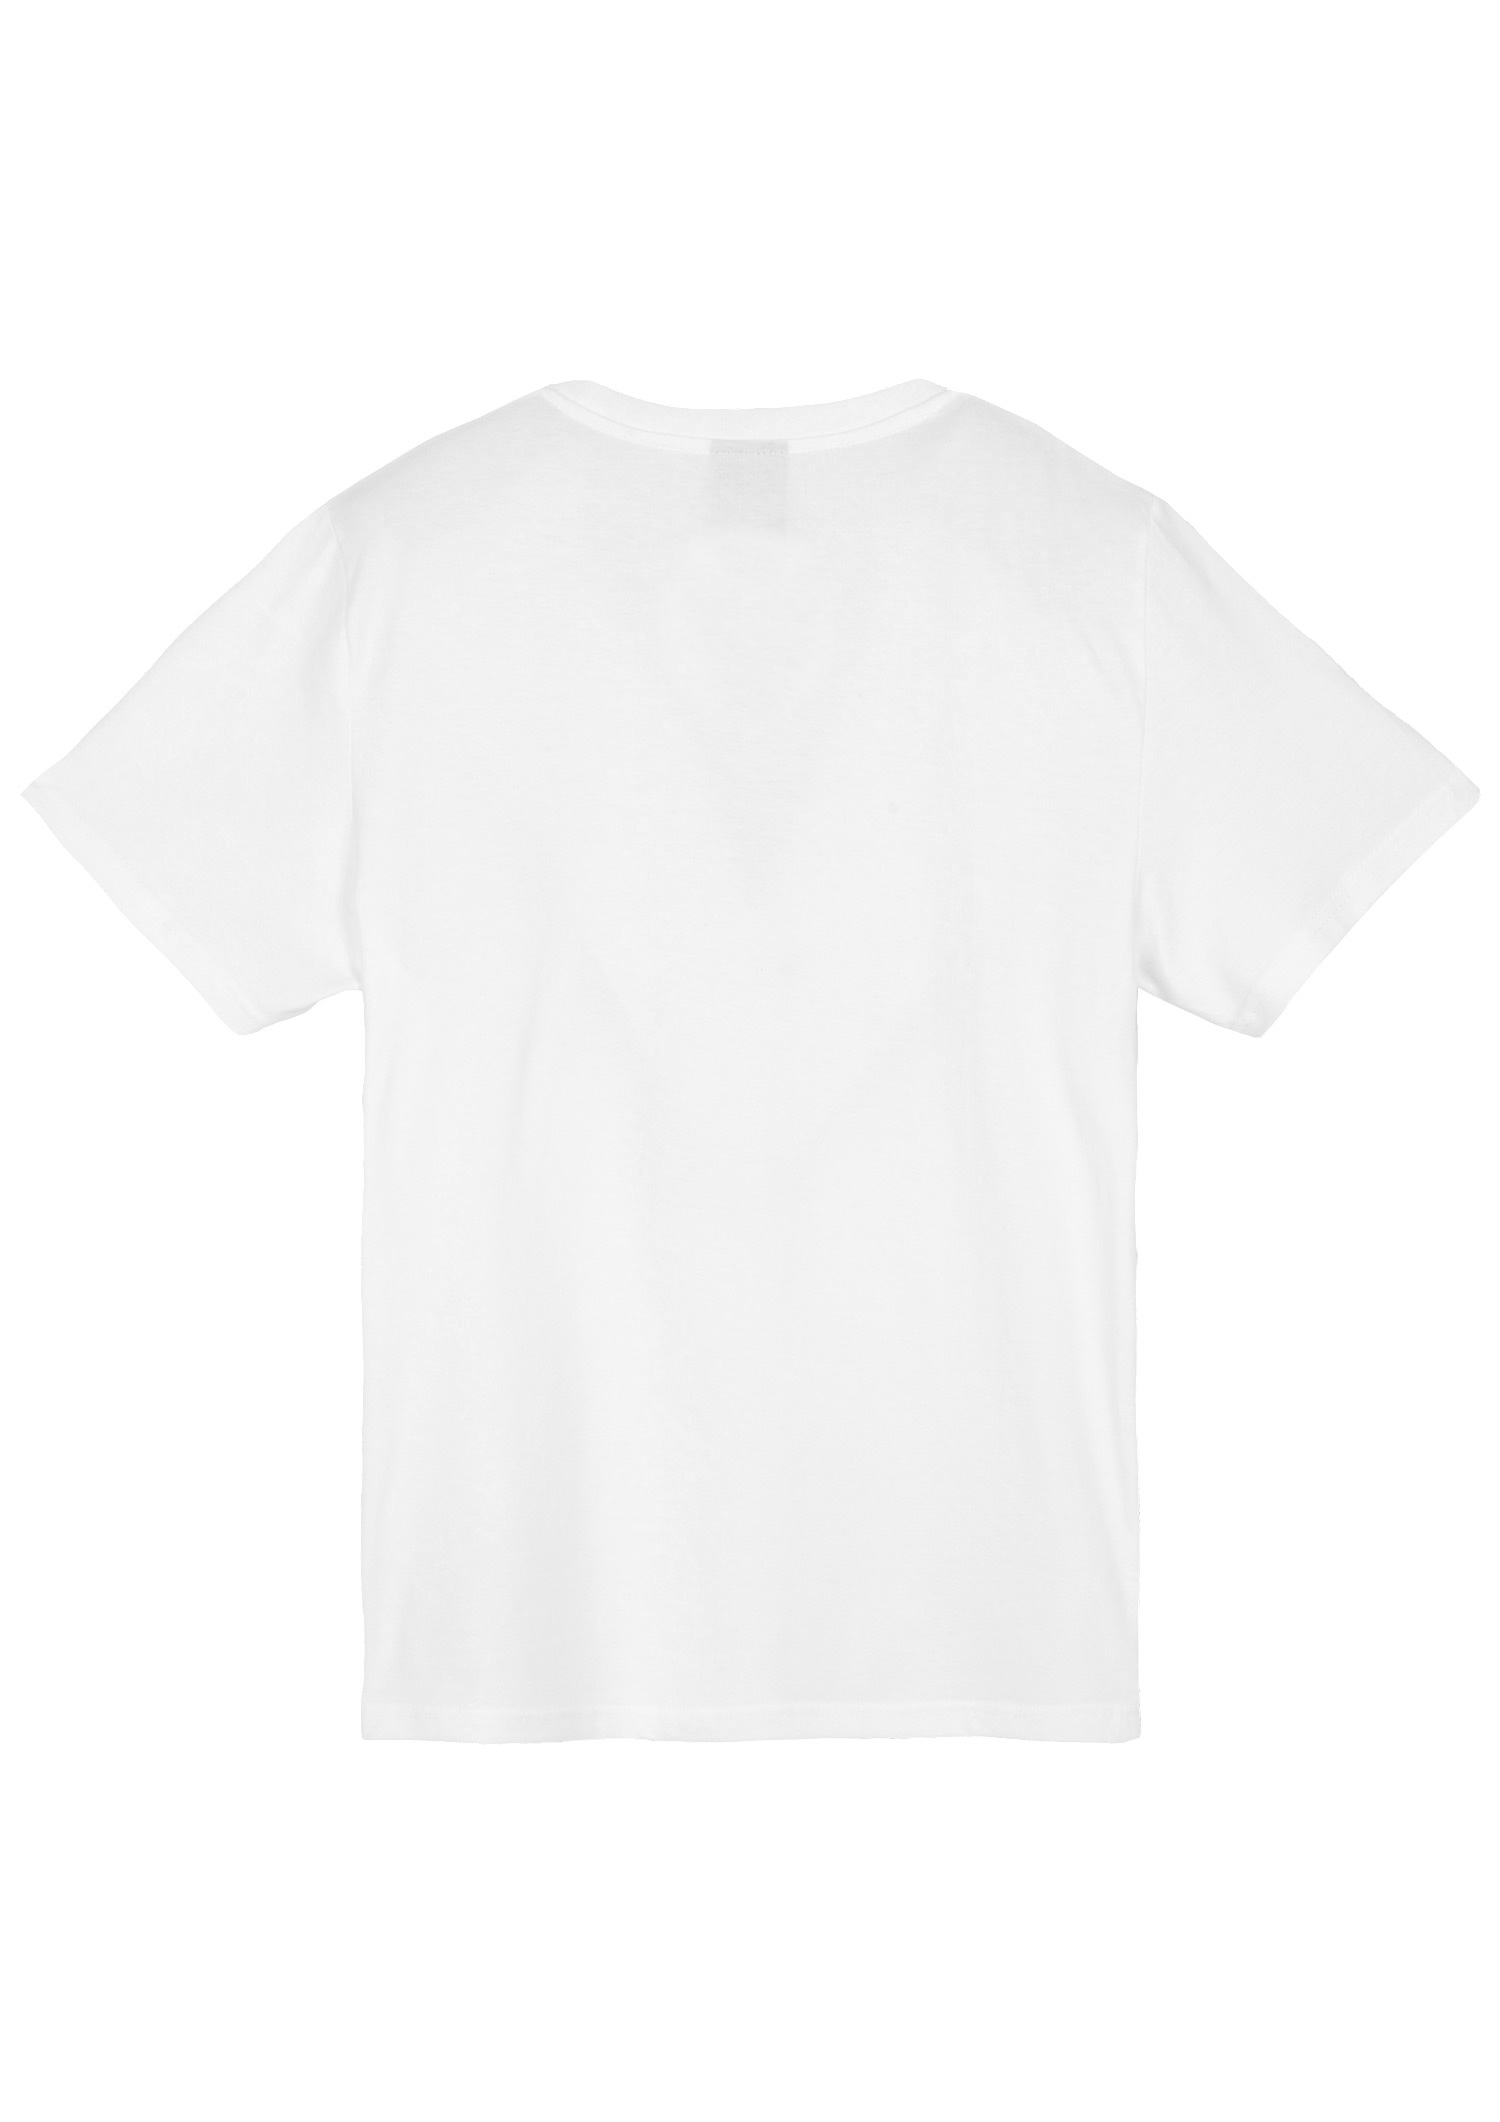 T-Shirt Kids Promotion - white